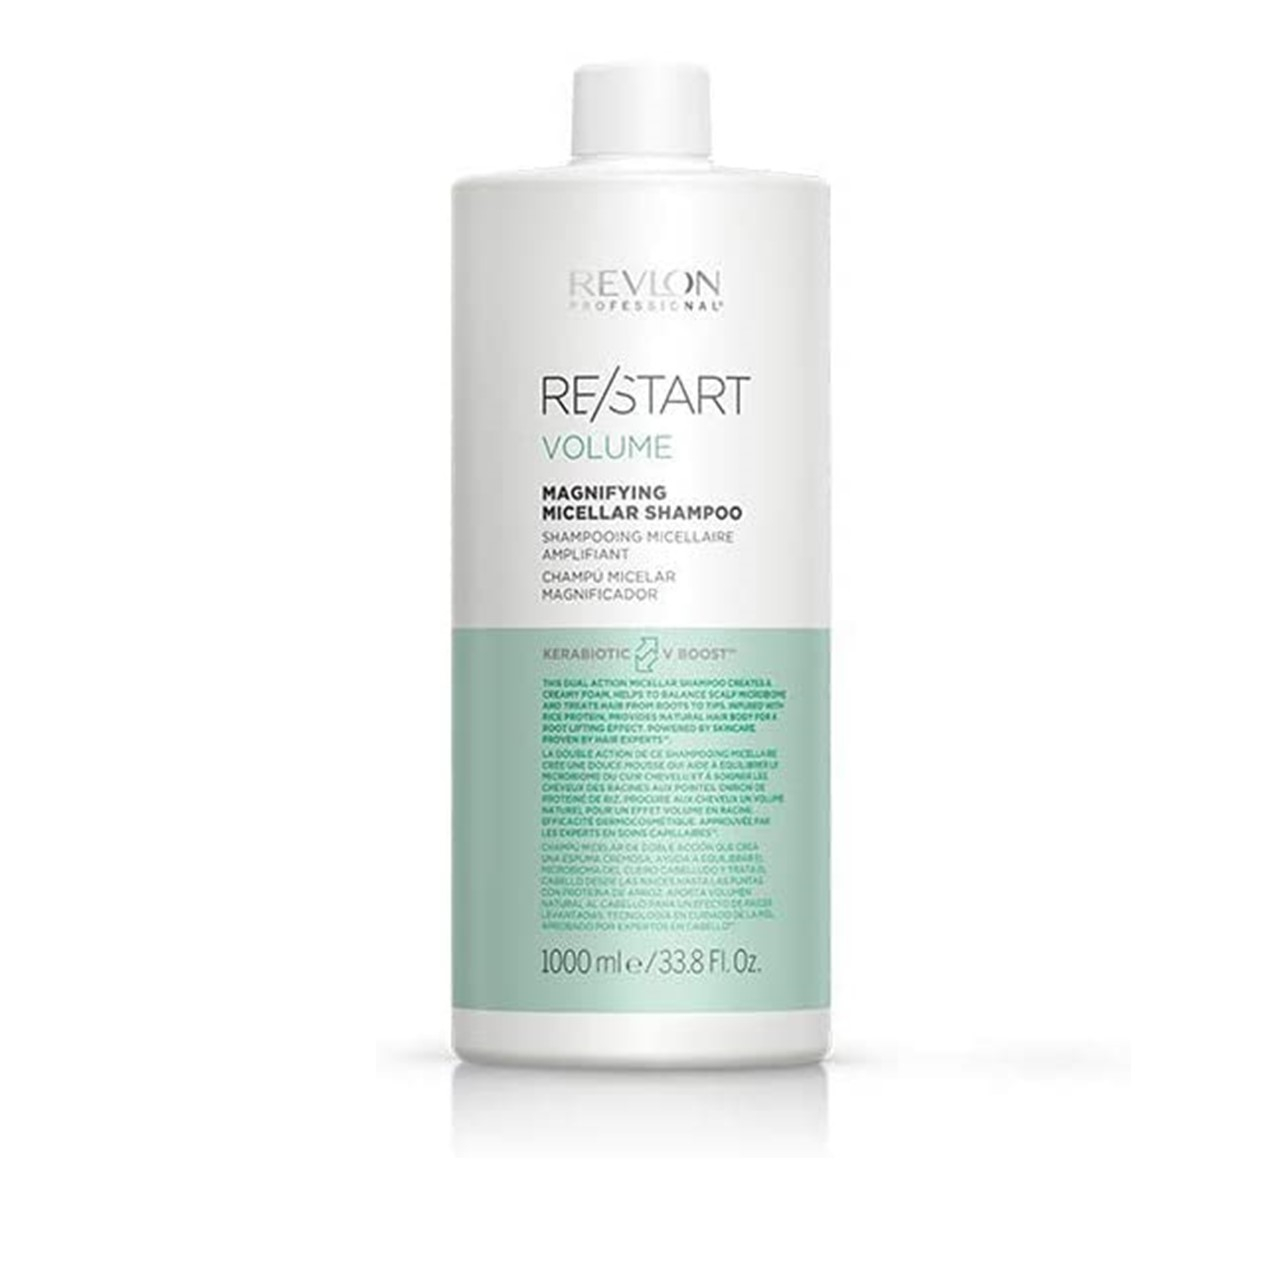 Buy Revlon Professional (33.81fl · 1L Re/Start USA Volume Magnifying oz) Shampoo Micellar